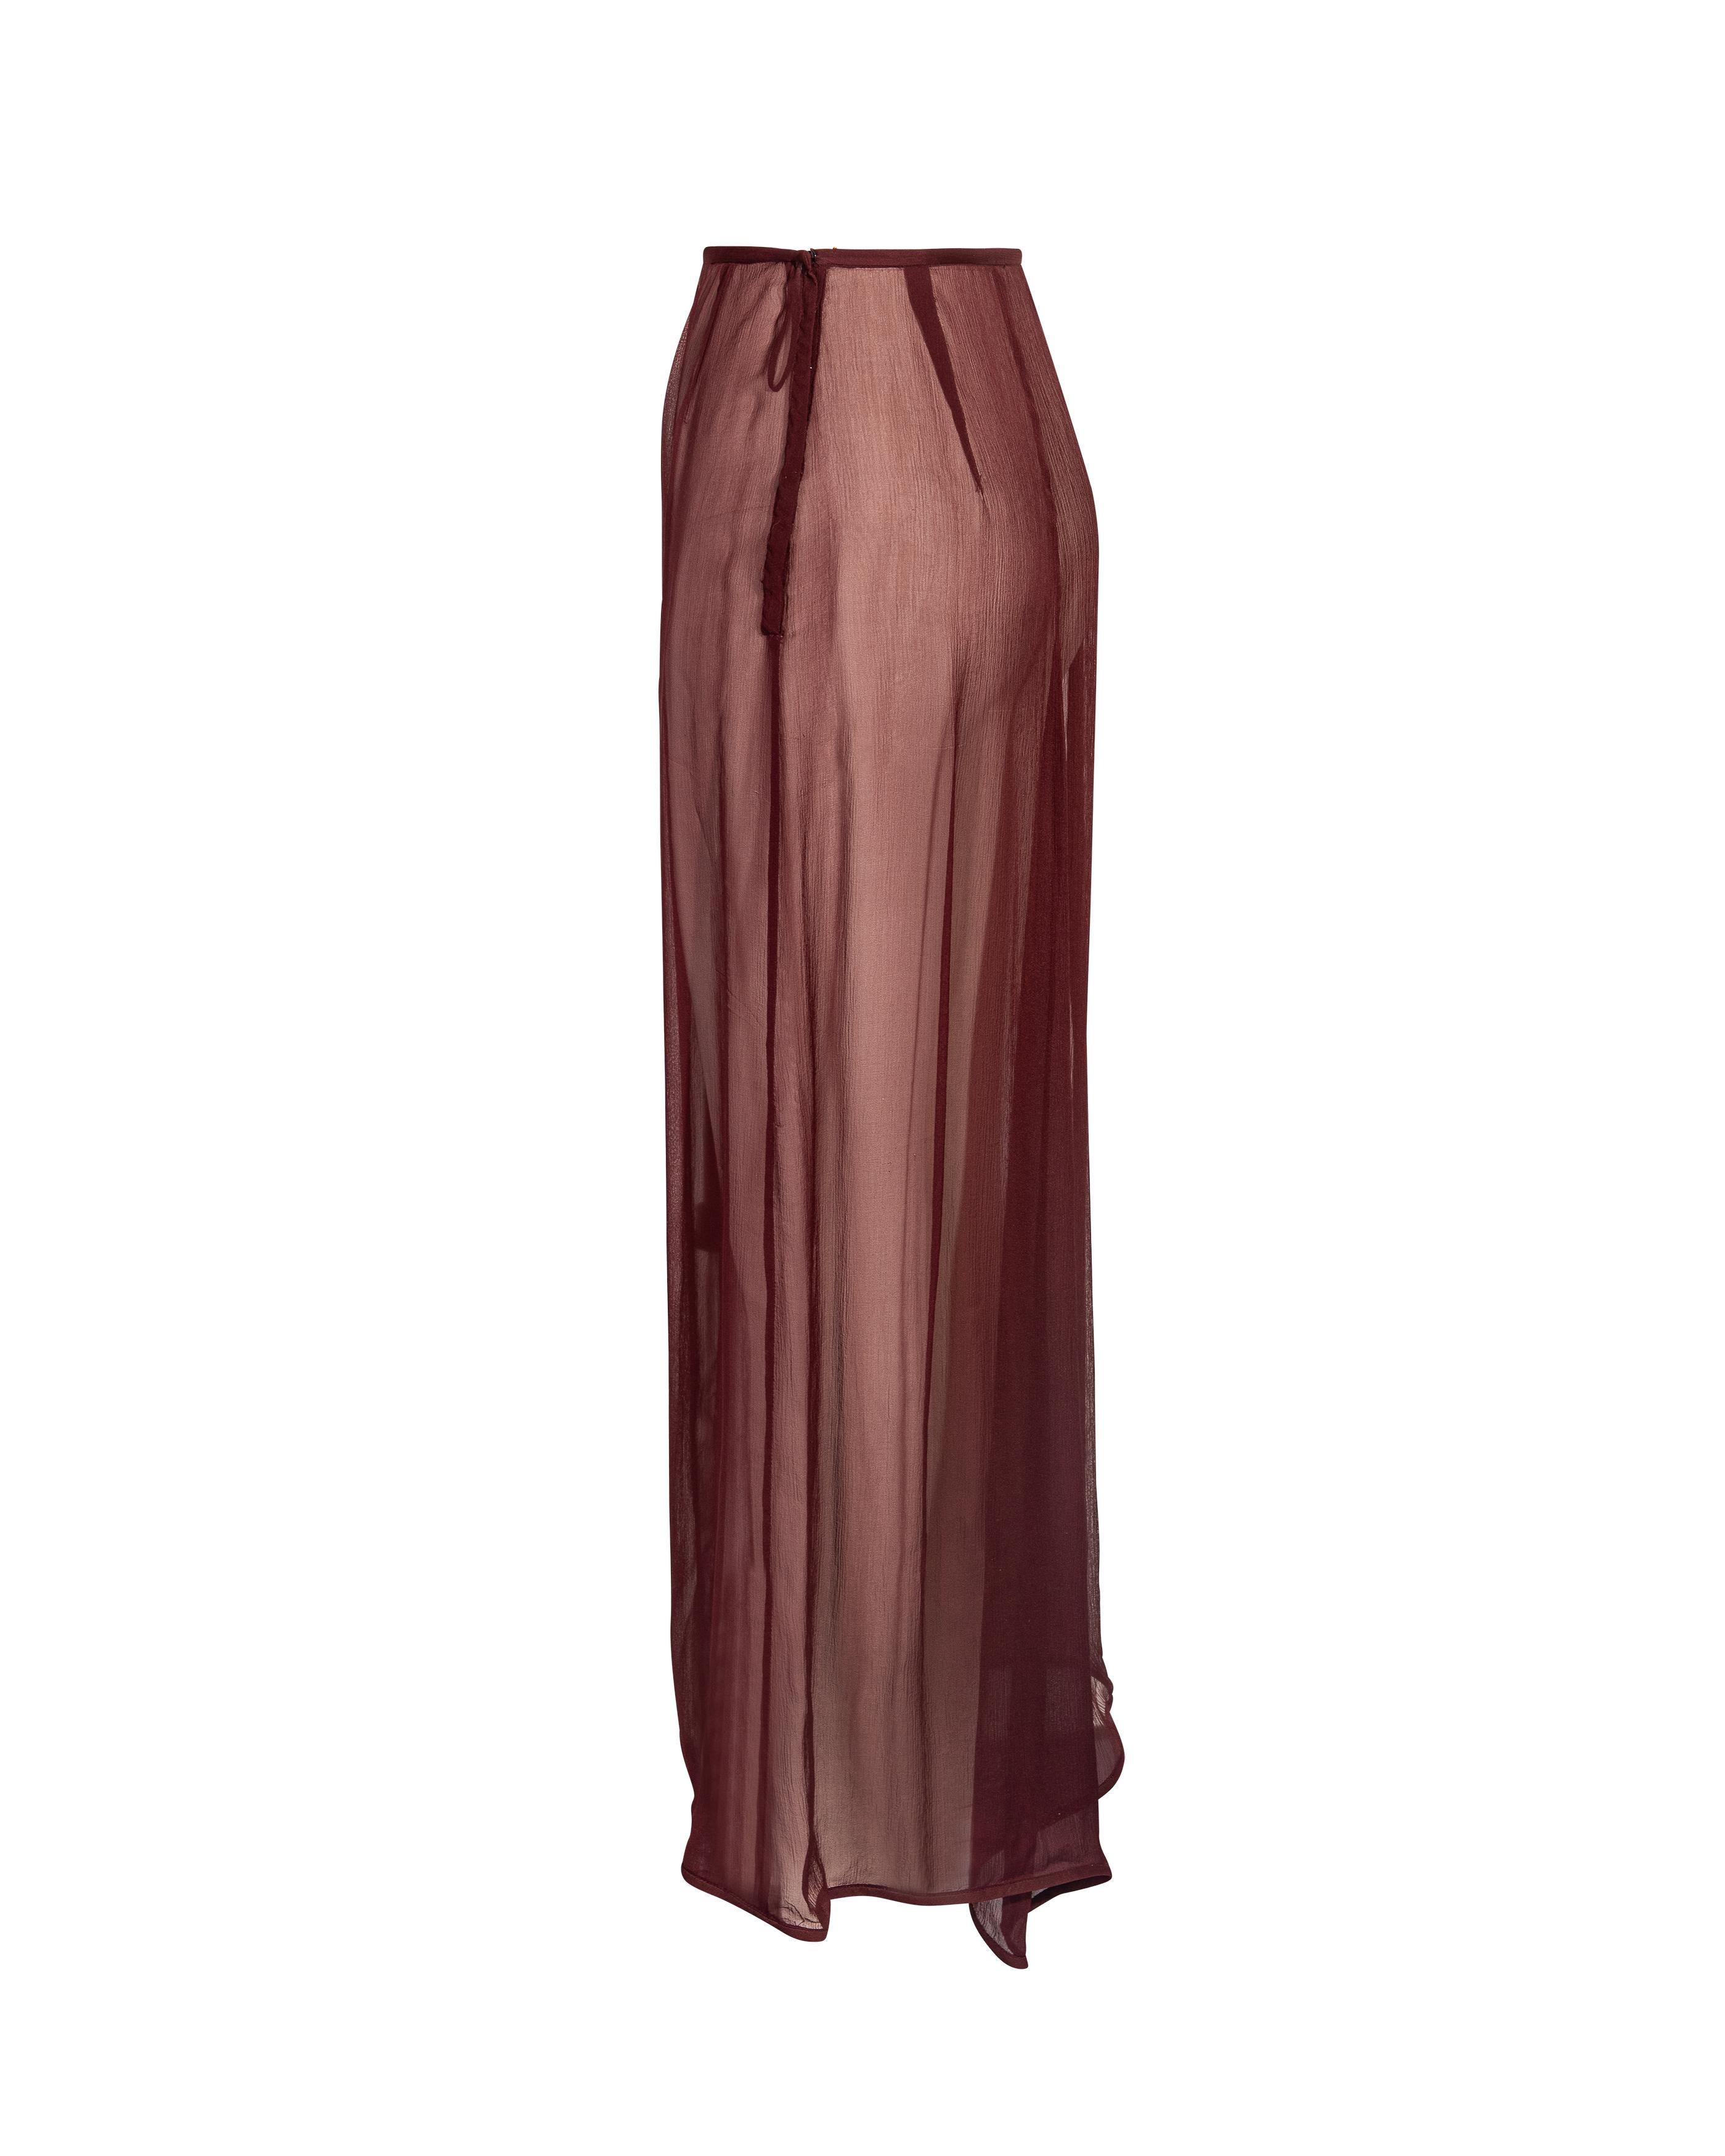 S/S 1997 Prada by Miuccia Prada Merlot Silk Chiffon Skirt Set 5